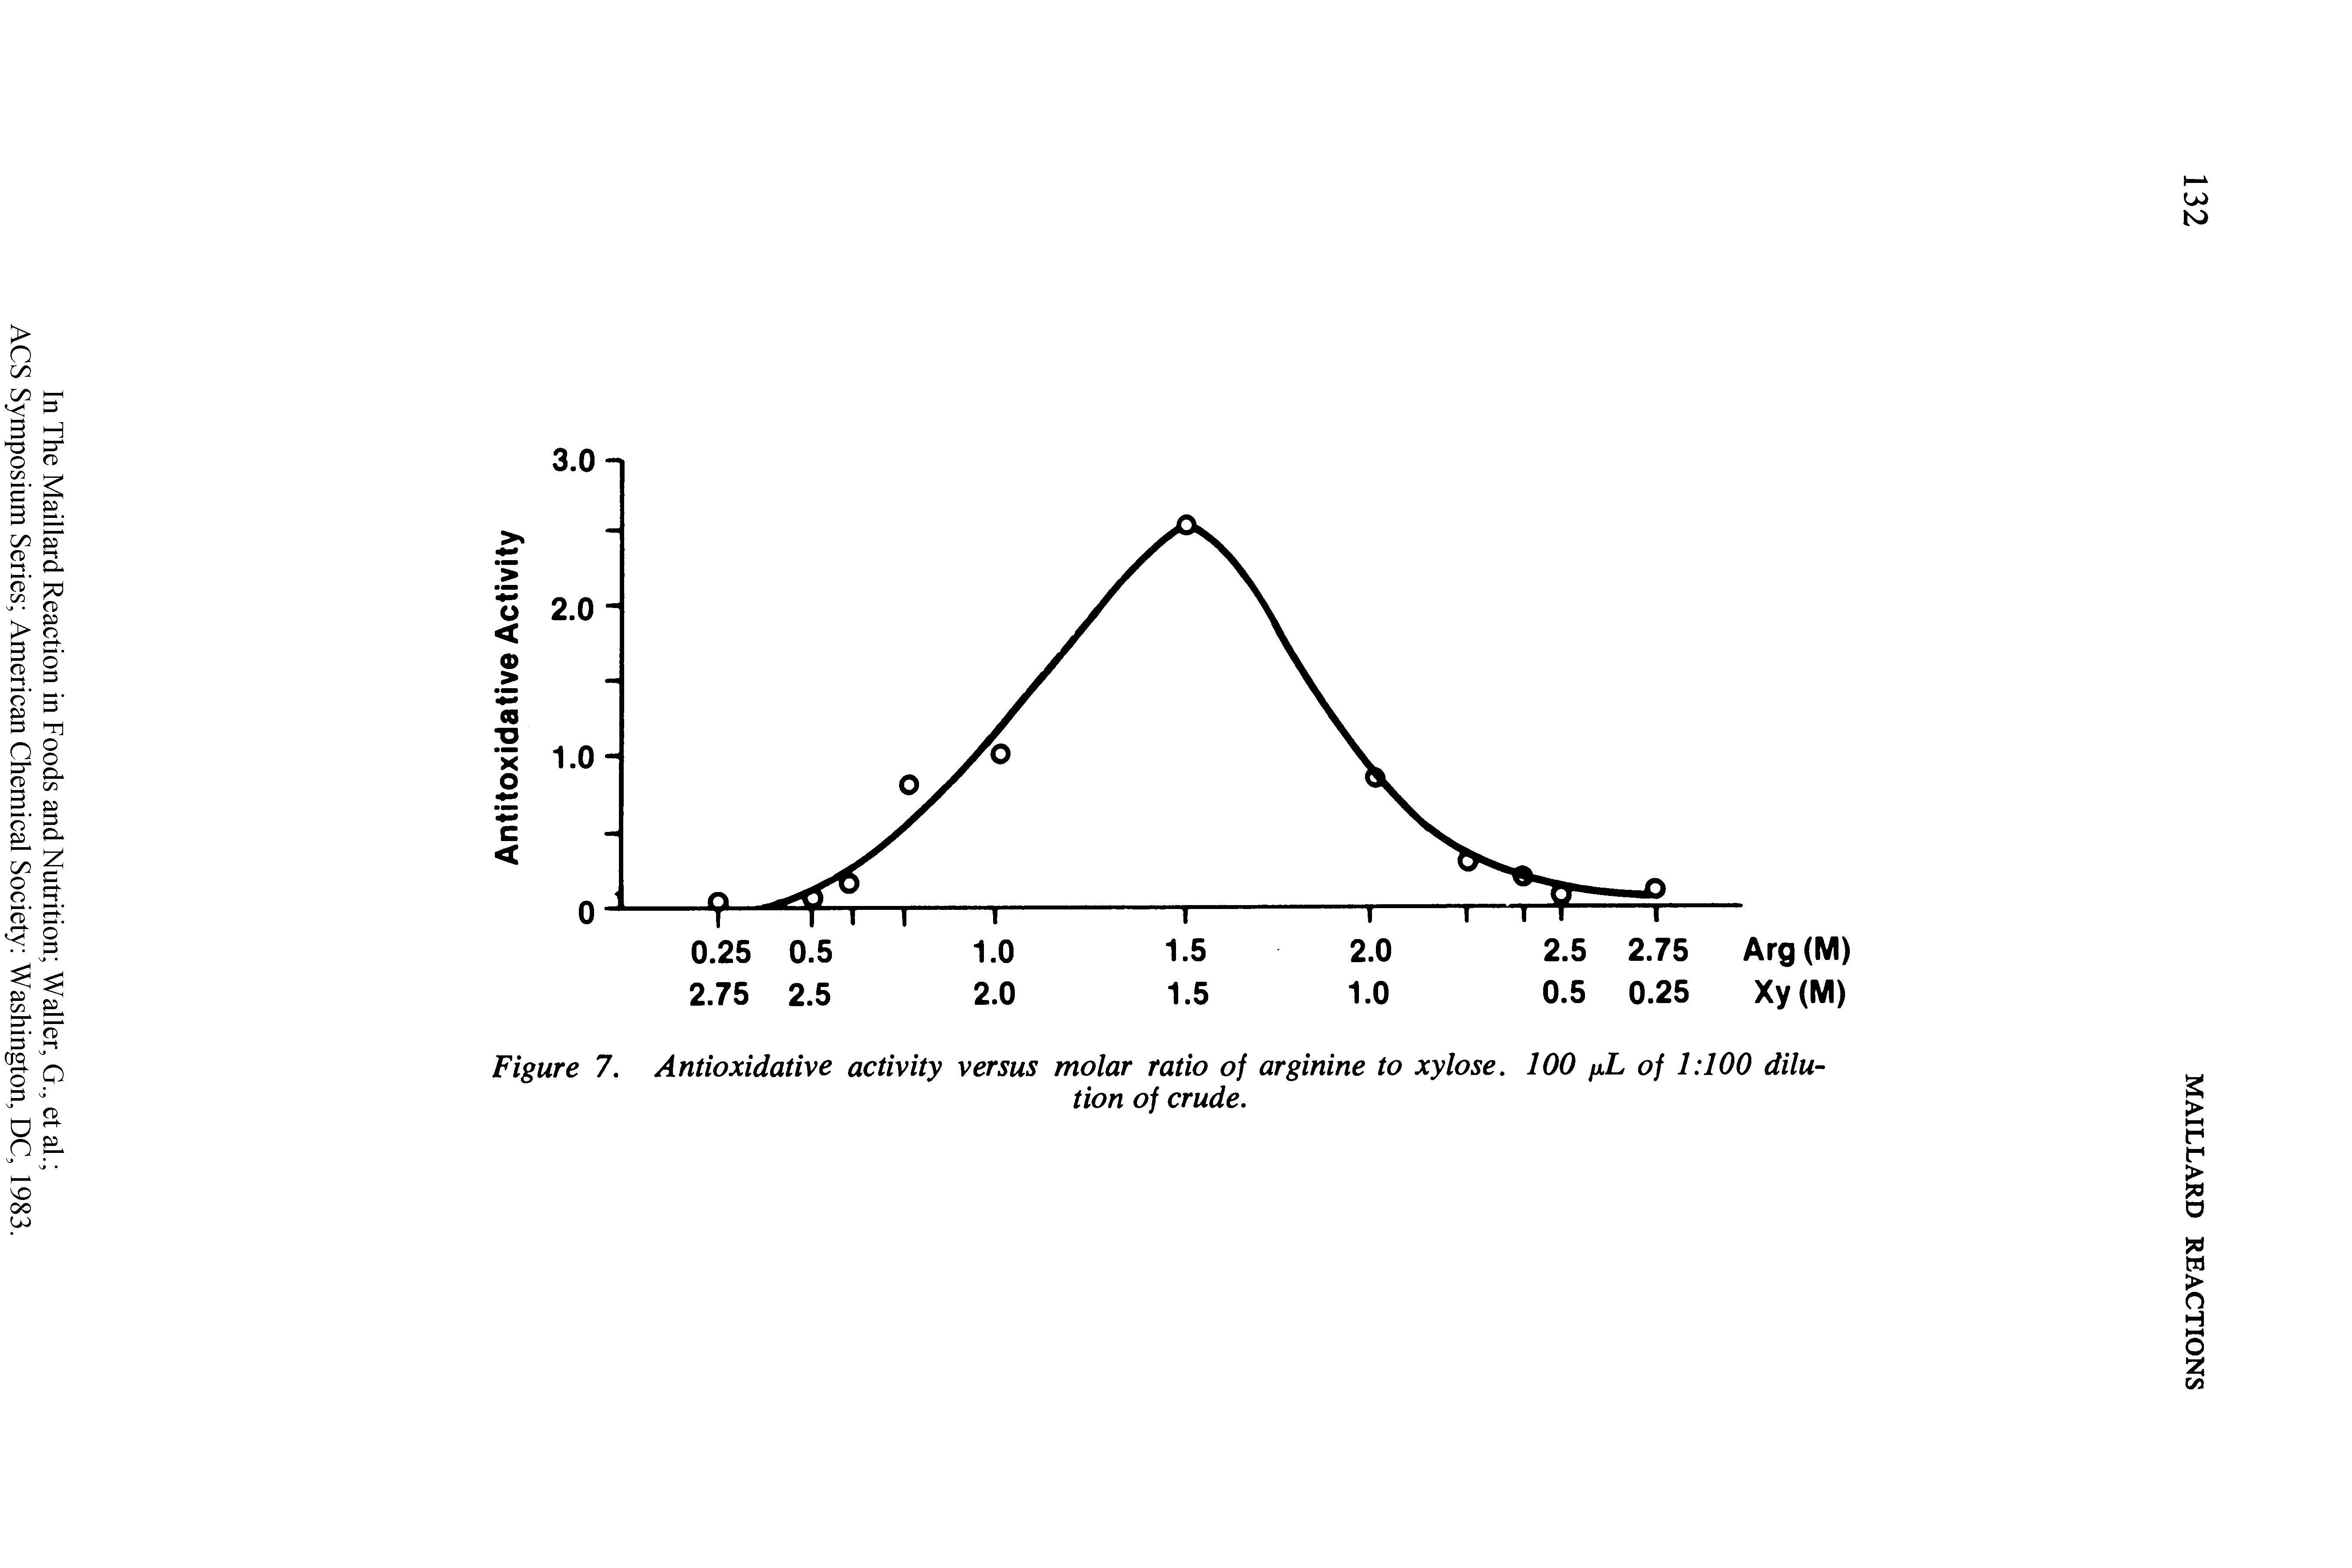 Figure 7. Antioxidative activity versus molar ratio of arginine to xylose. 100 jxL of 1 100 dilution of crude.